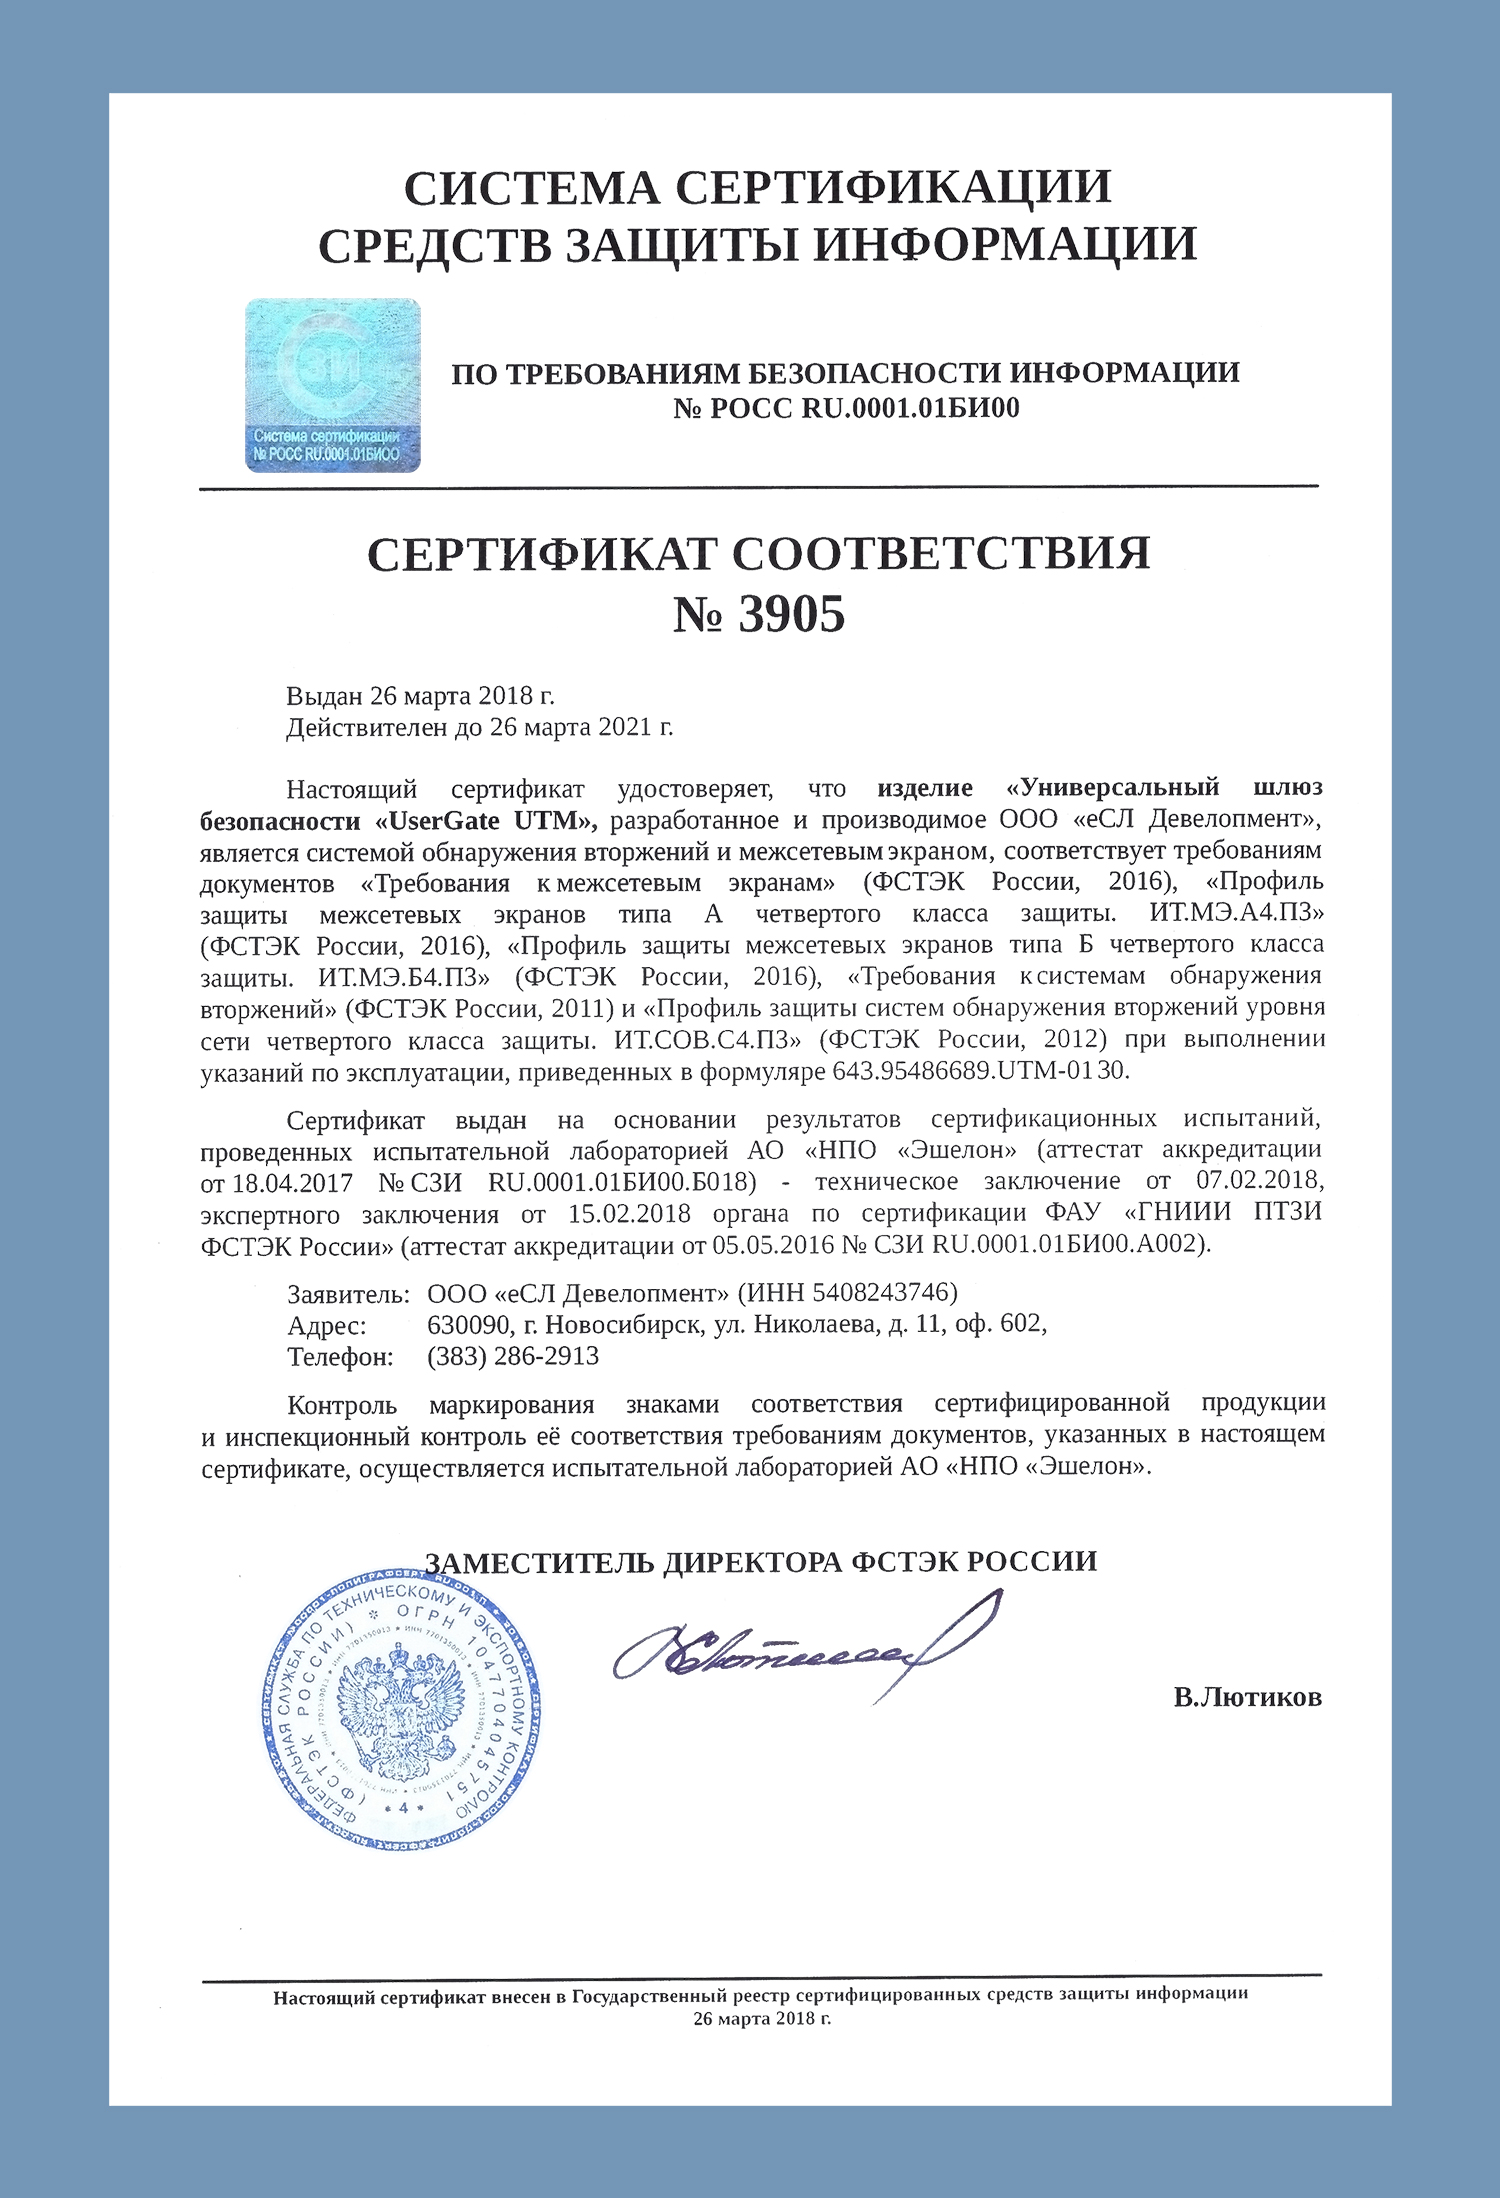 Dr web сертификат фстэк